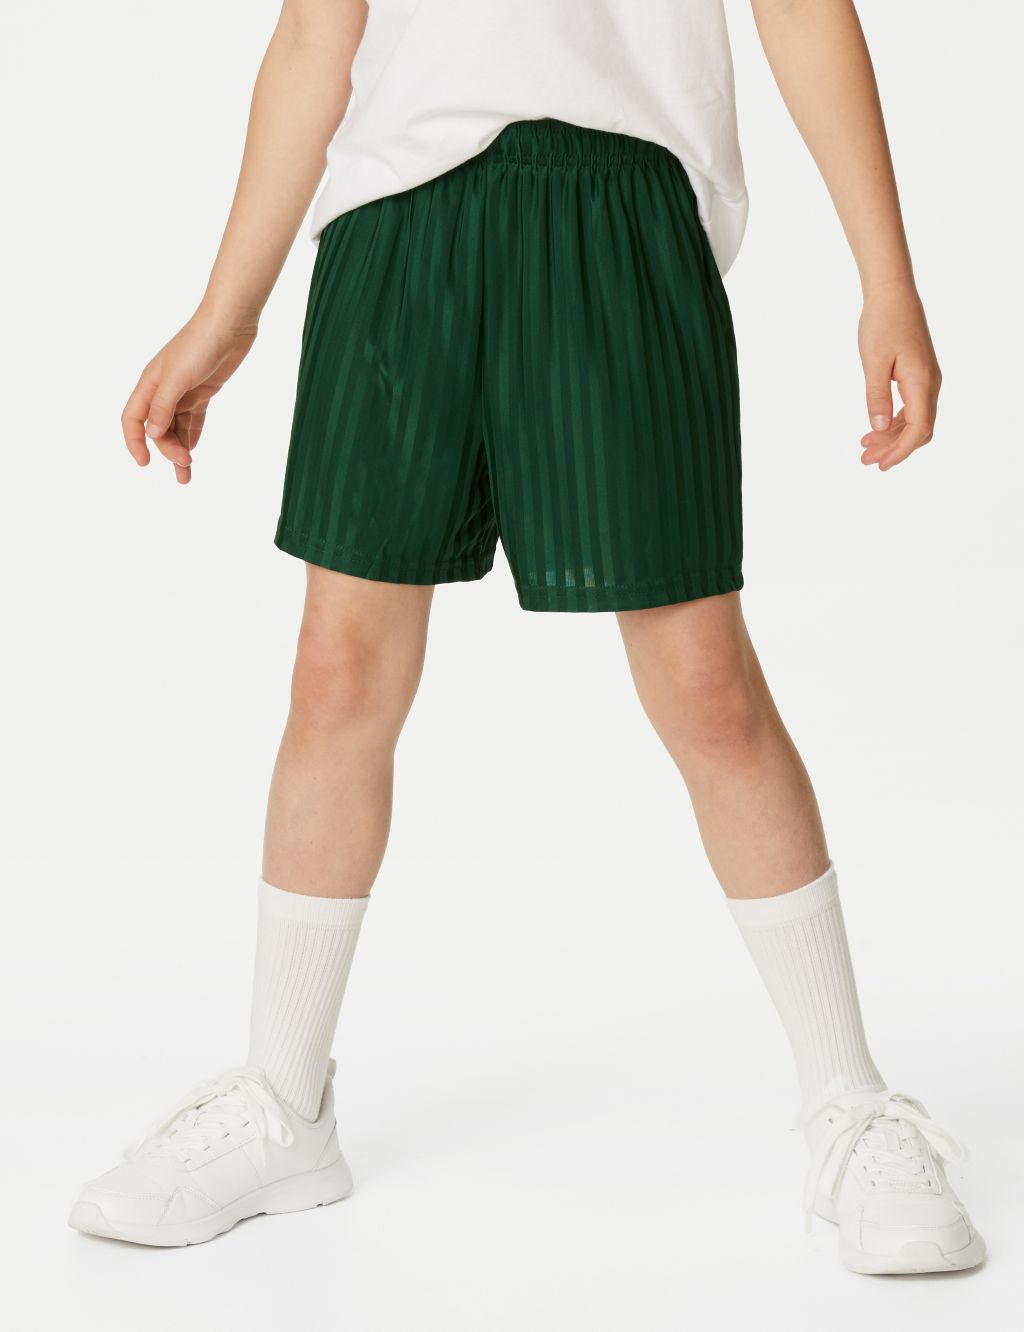 Unisex Sports School Shorts (2-16 Yrs) image 4